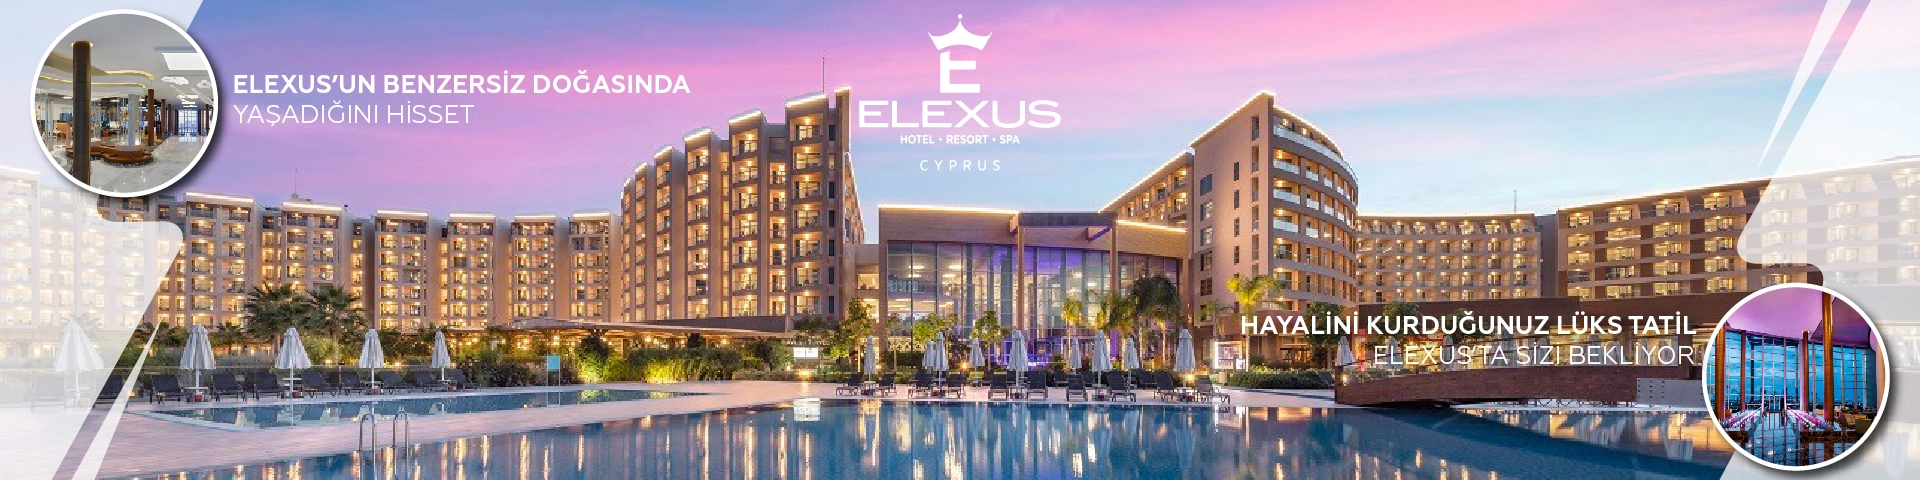 Elexus Hotel & Resort & Casino